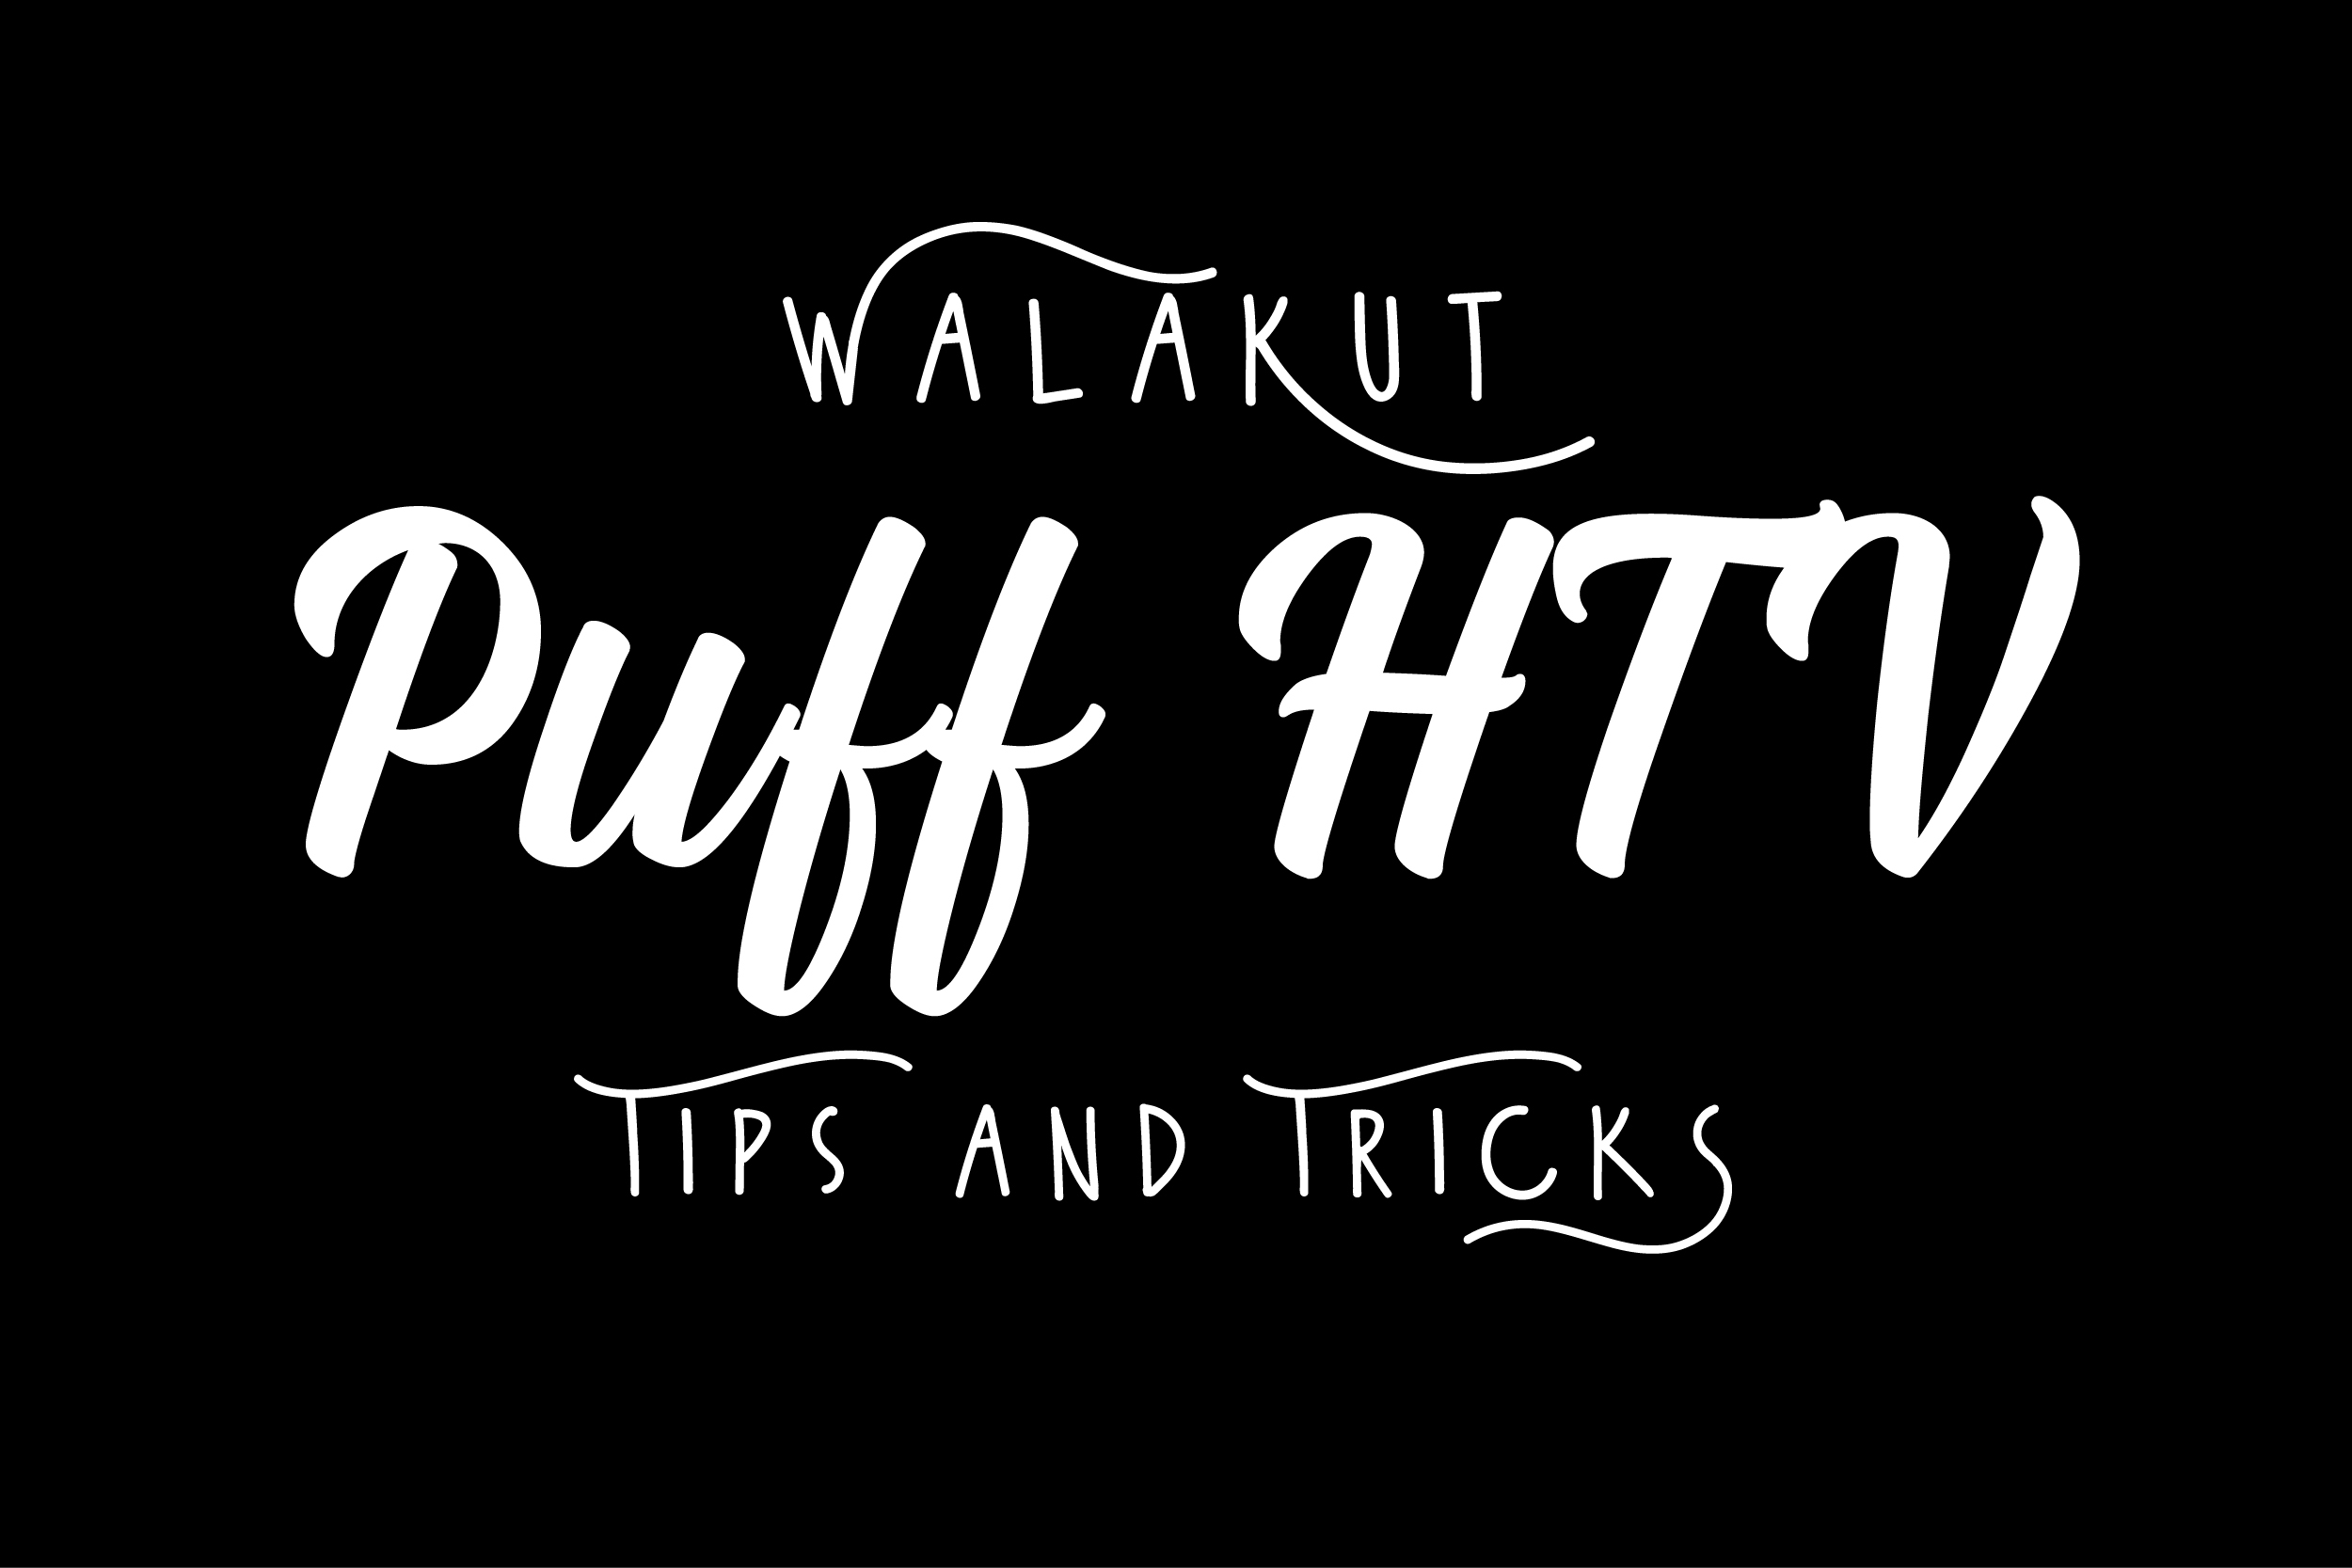 WALAKut Puff HTV Tips and Tricks